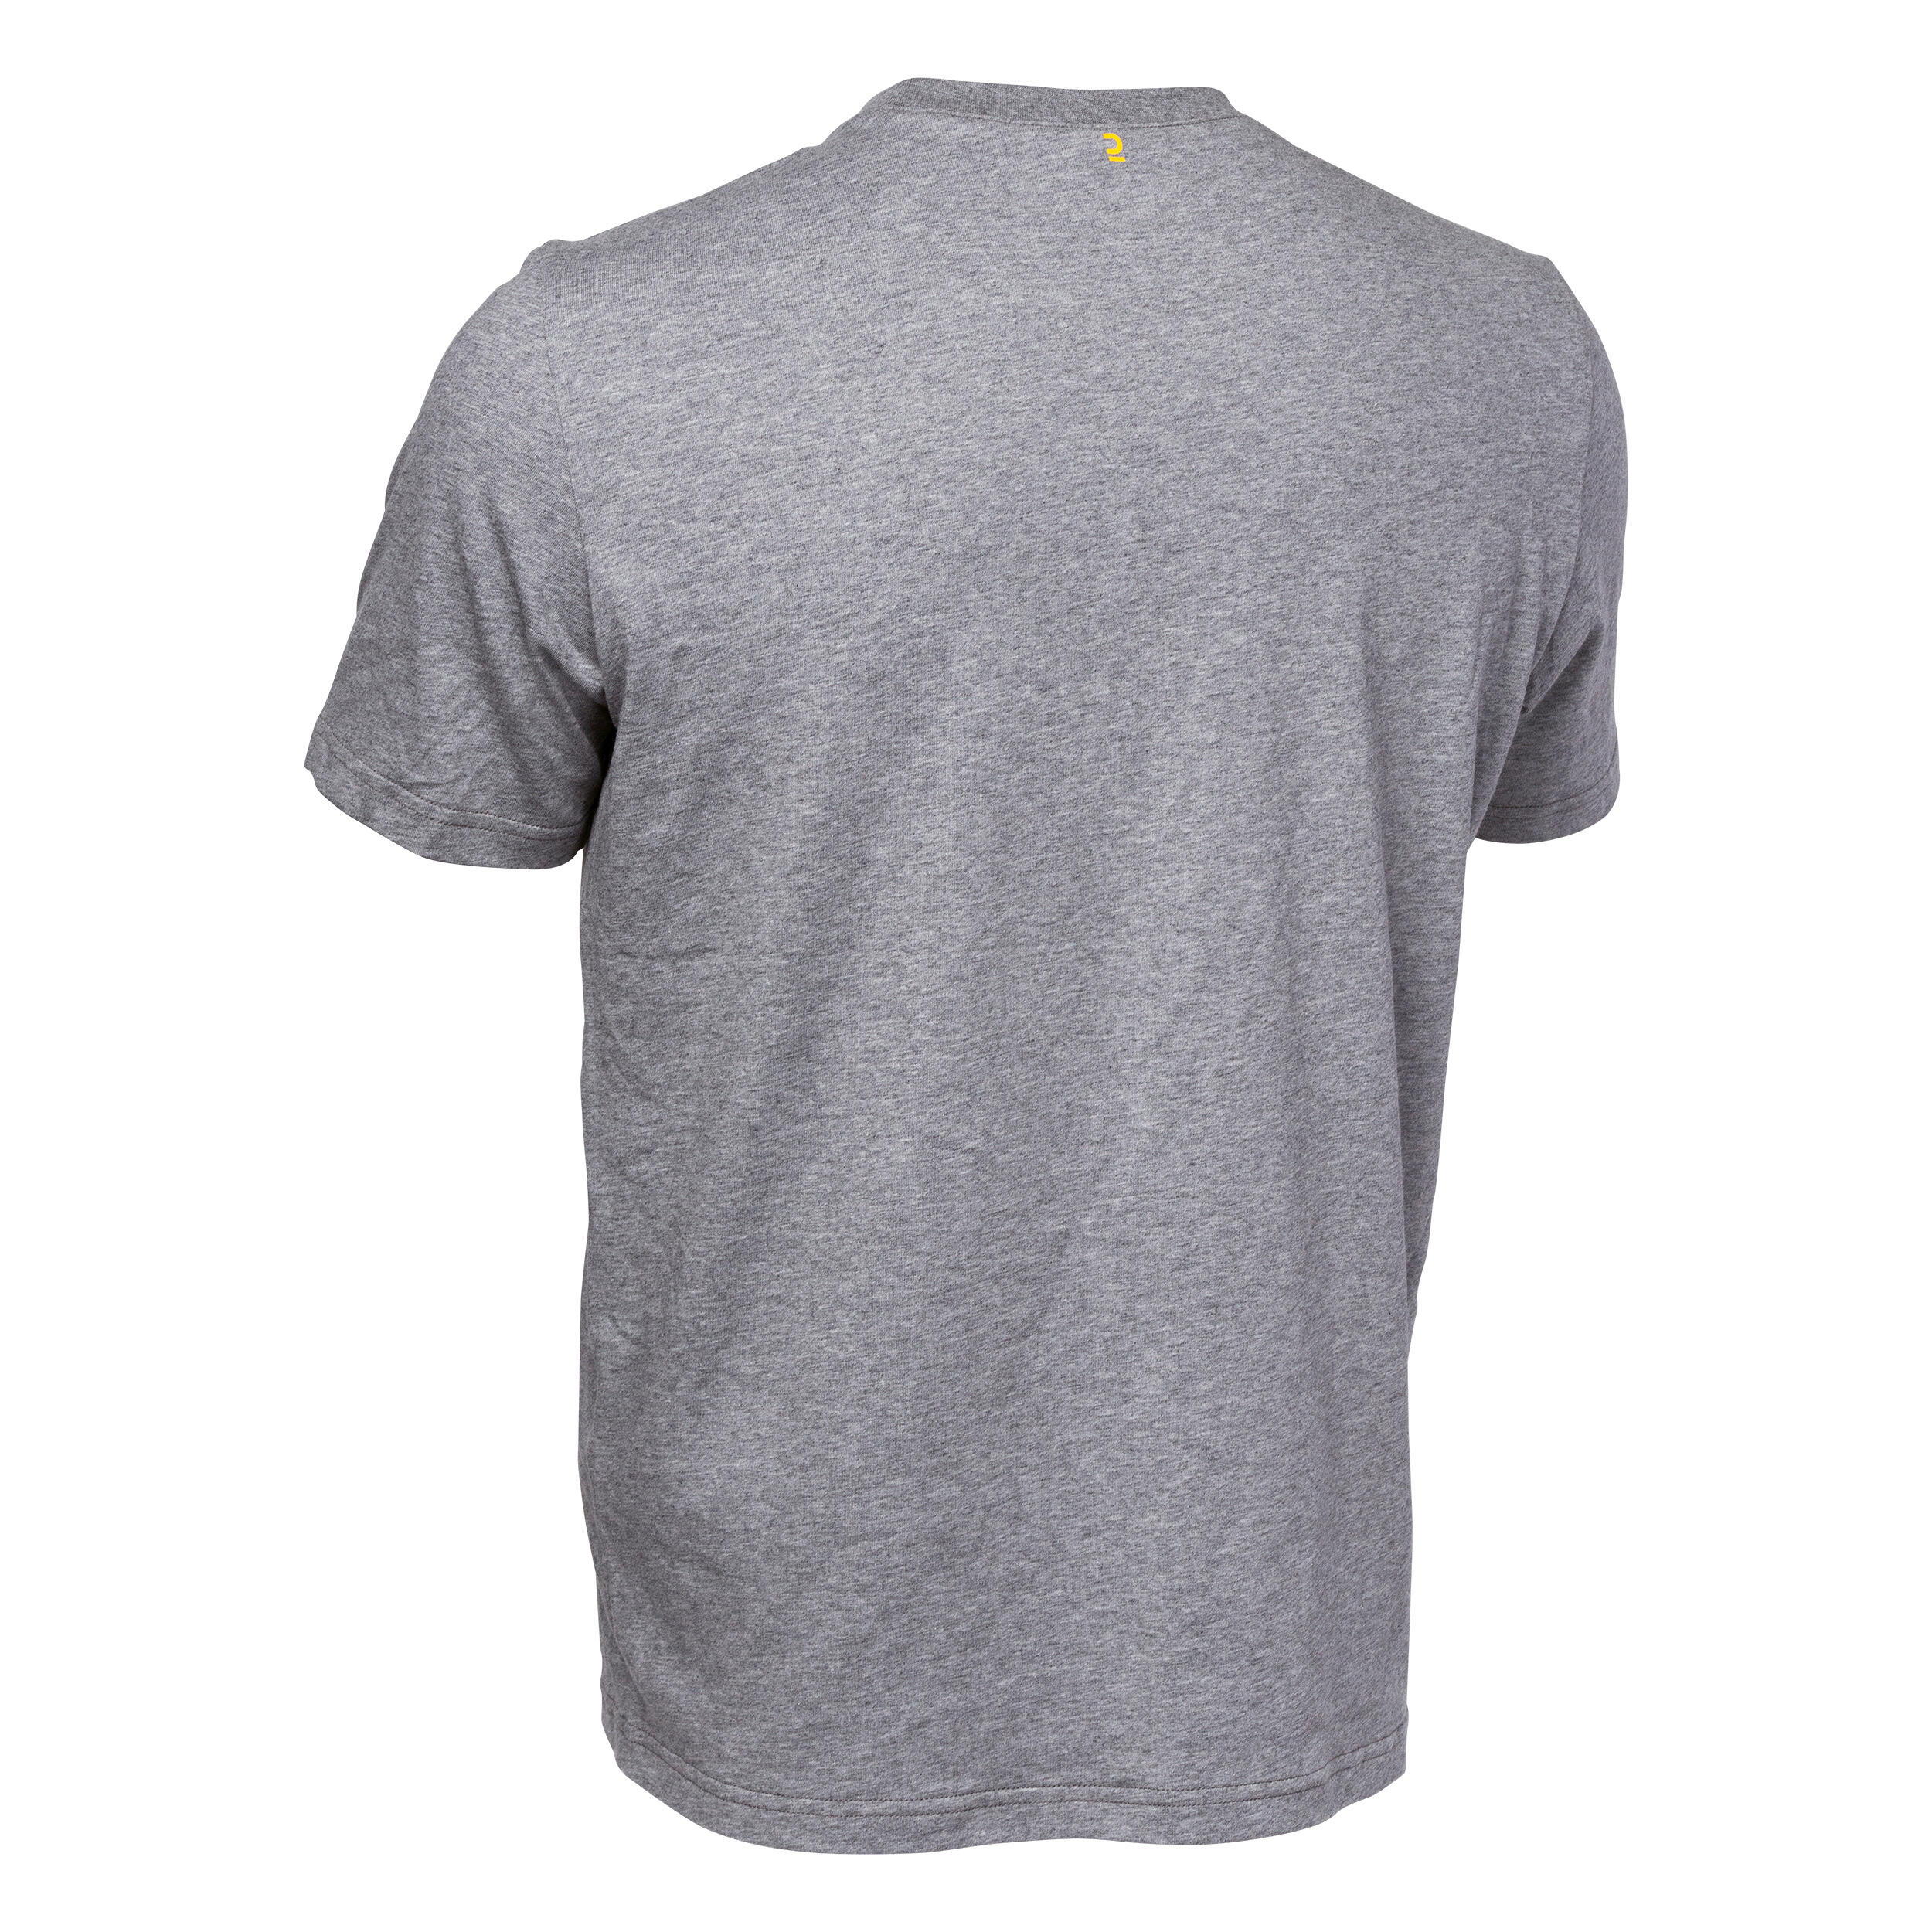 Men's Field Hockey T-Shirt FH110 - Grey/Yellow 2/3